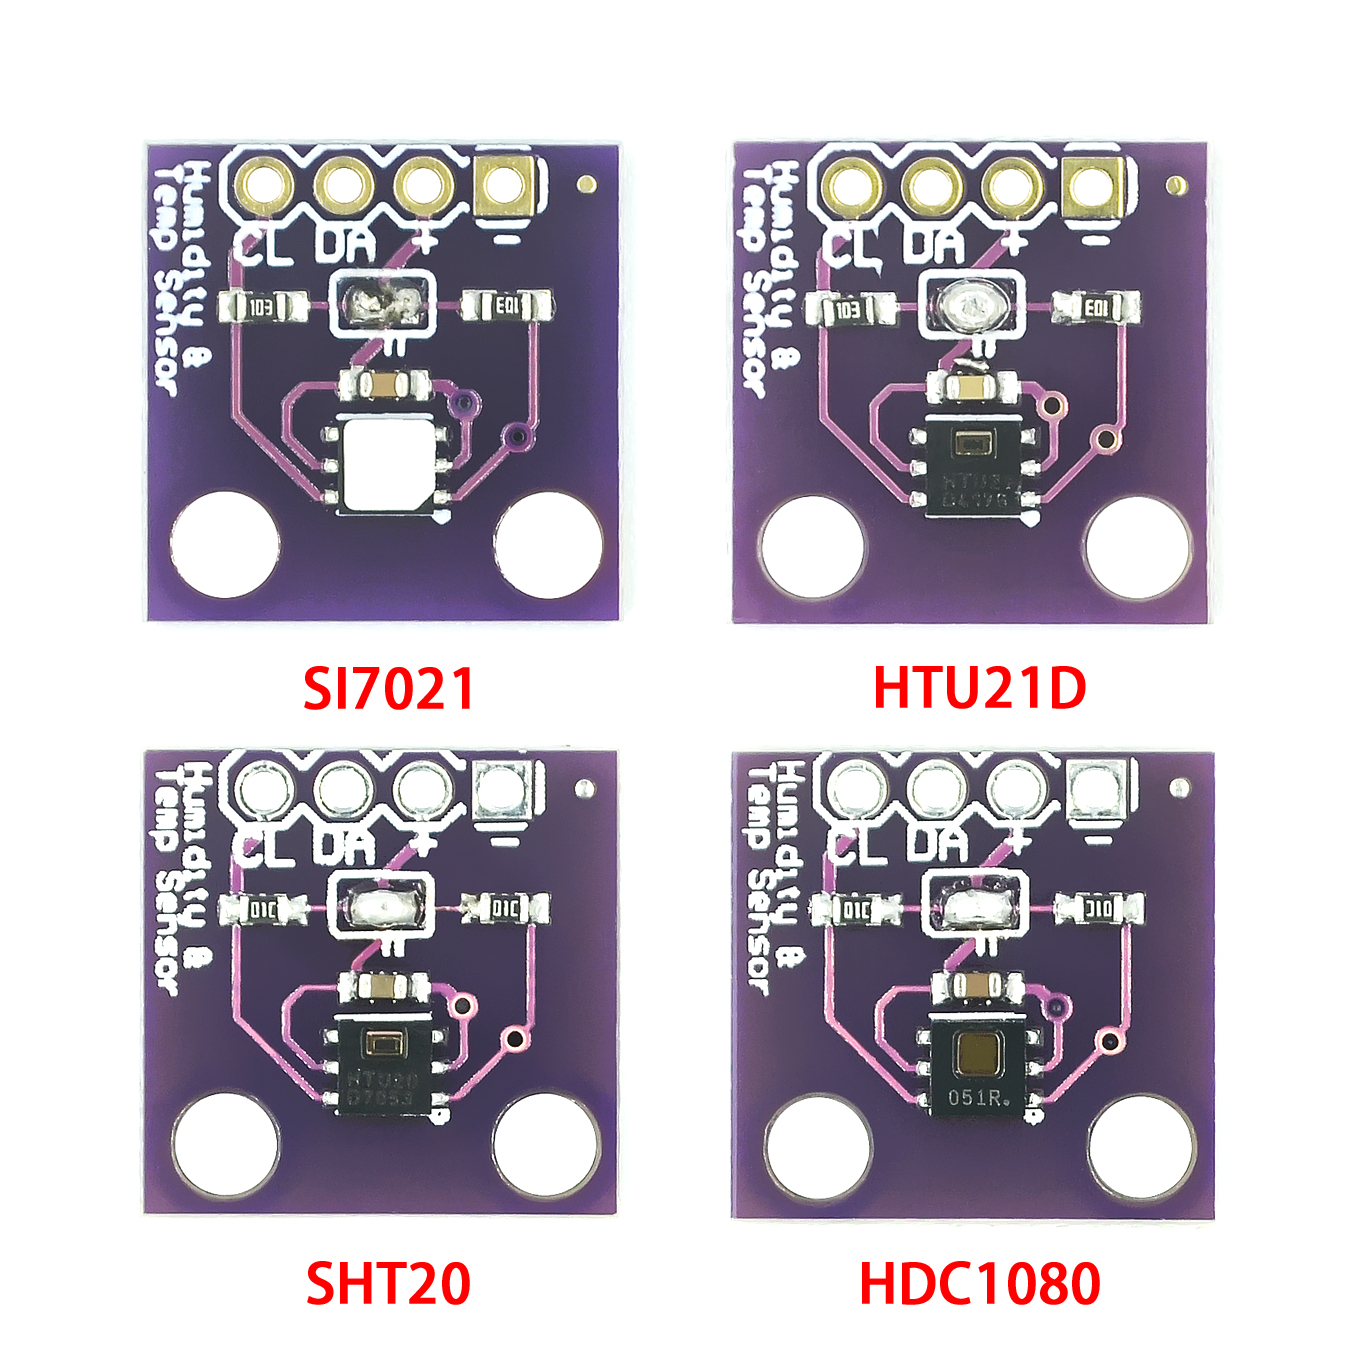 I2C Low Power GY-213V-HDC1080 High Accuracy Digital Humidity Temperature Sensor 